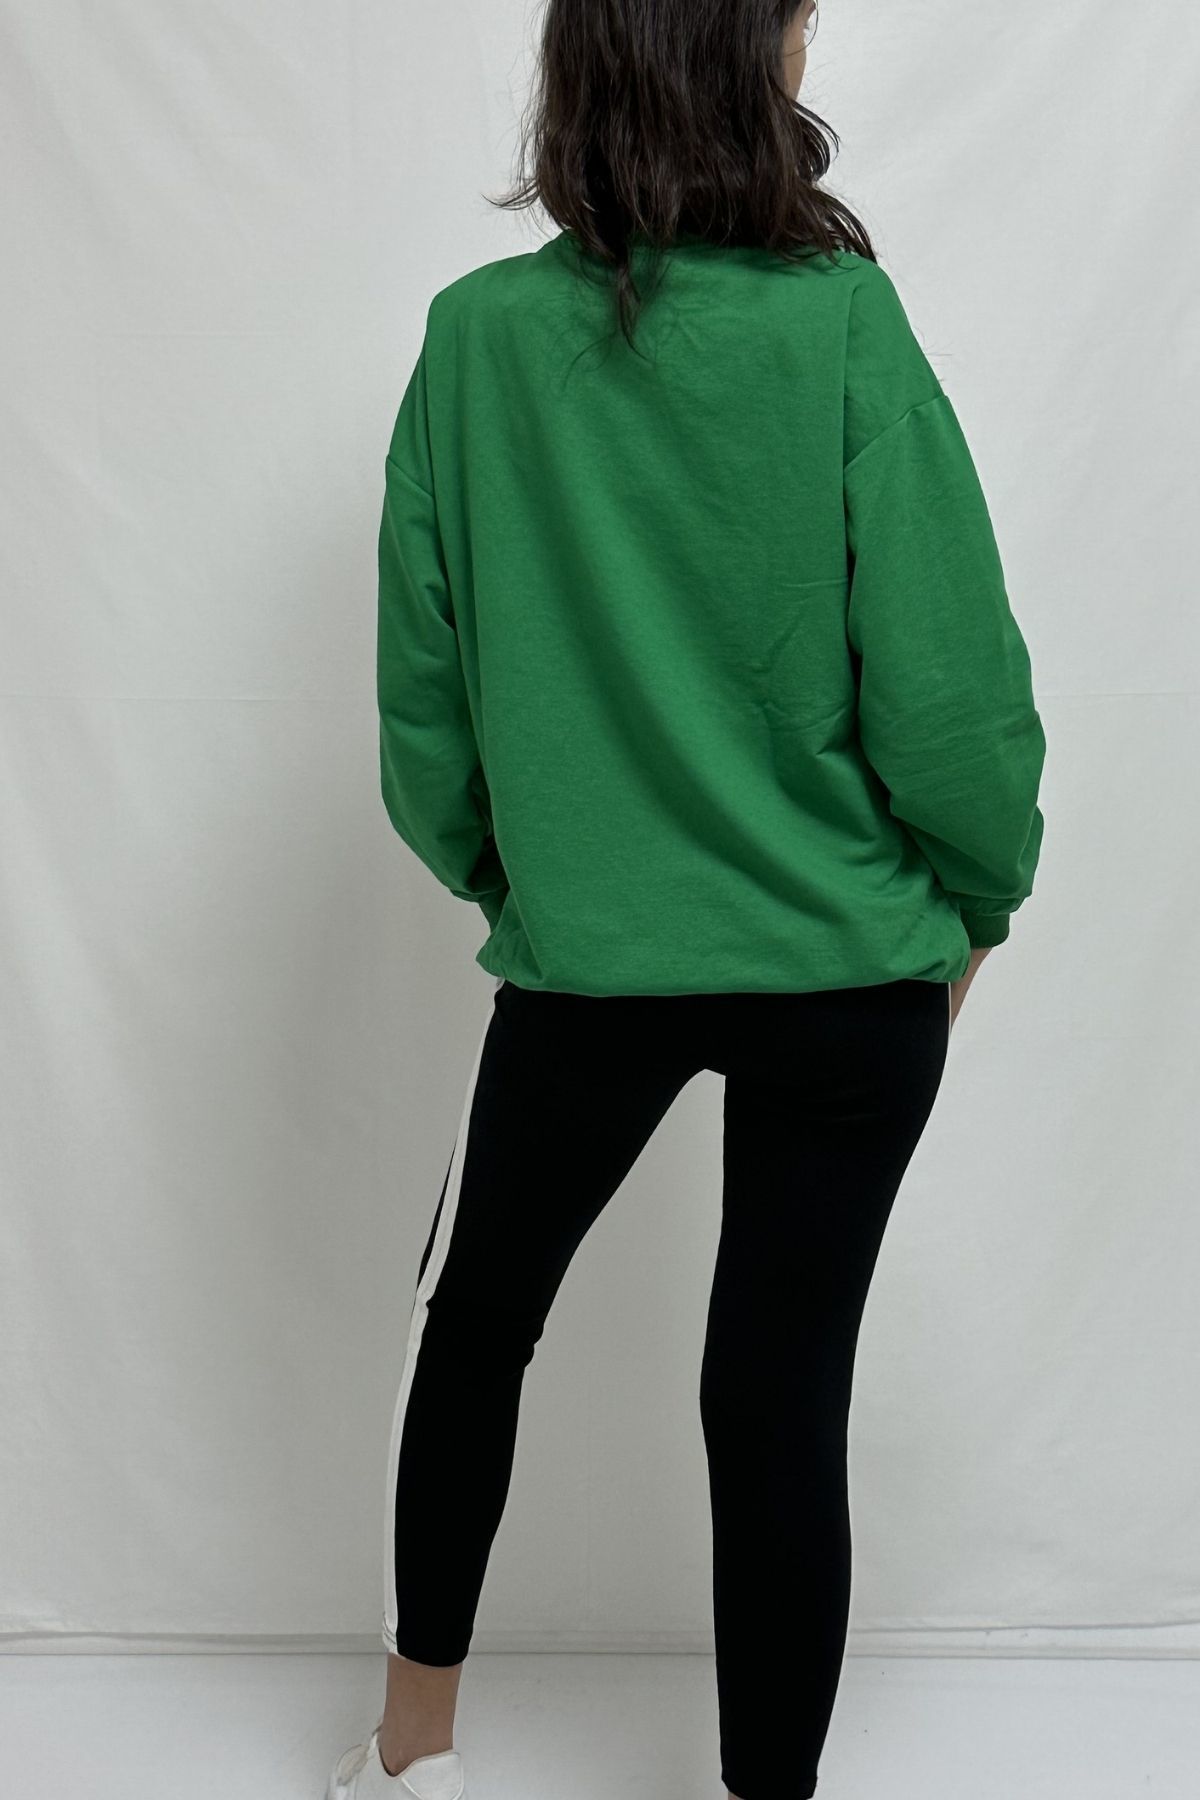 CLZ944 2 İplik Nakışlı Sweatshirt Yeşil